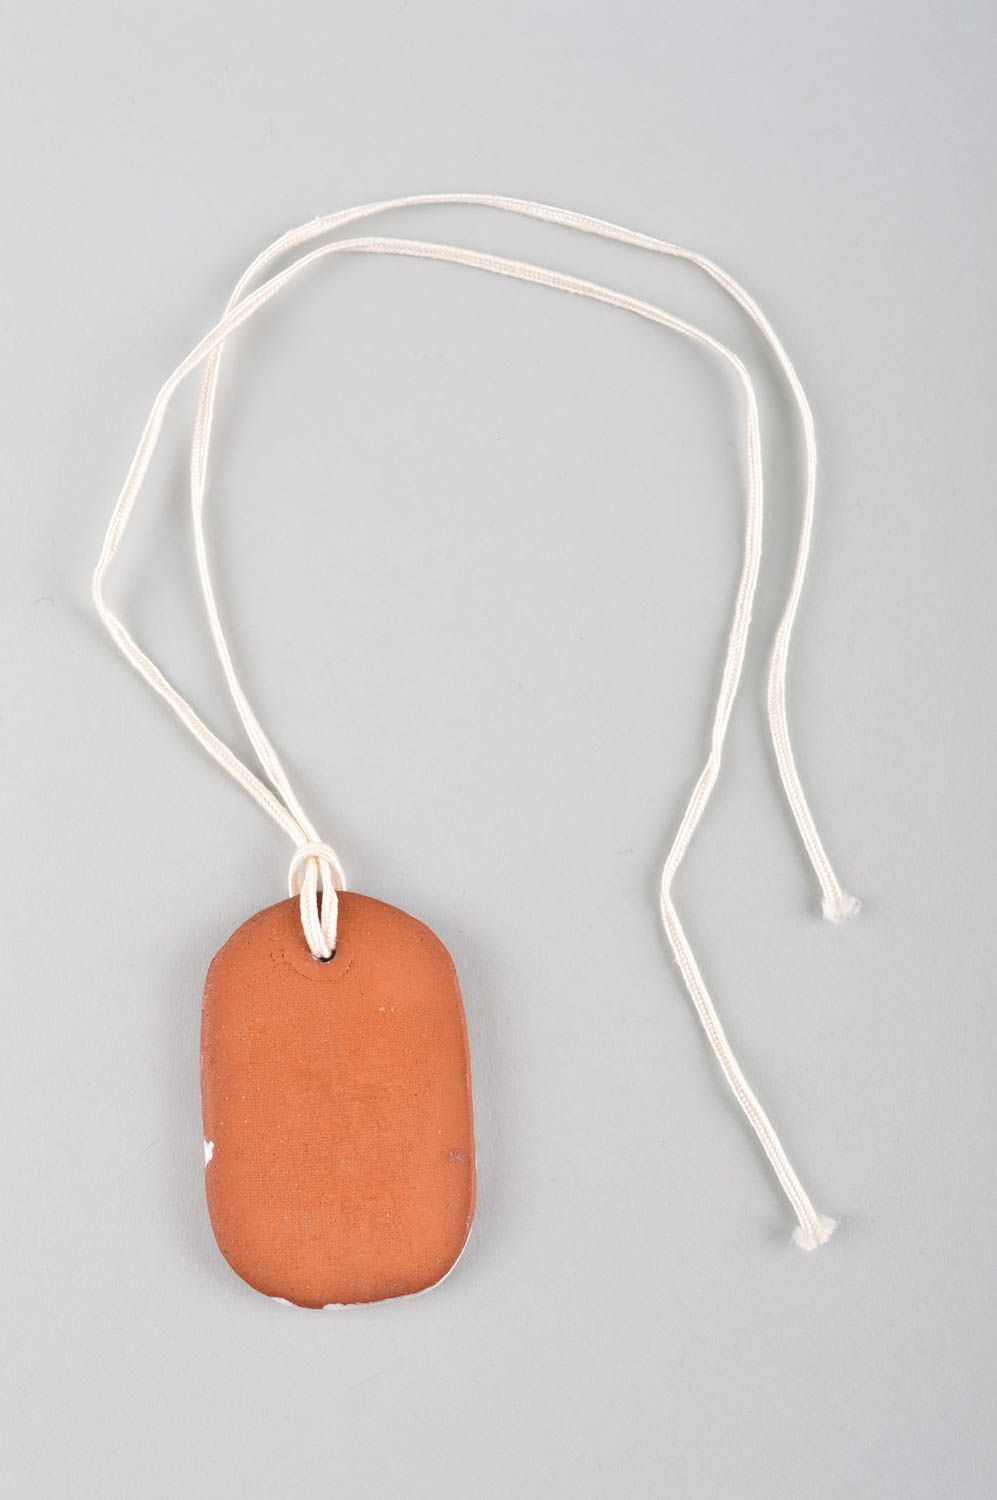 Clay pendant handmade pendant handmade clay pendant clay jewelry gift ideas photo 4